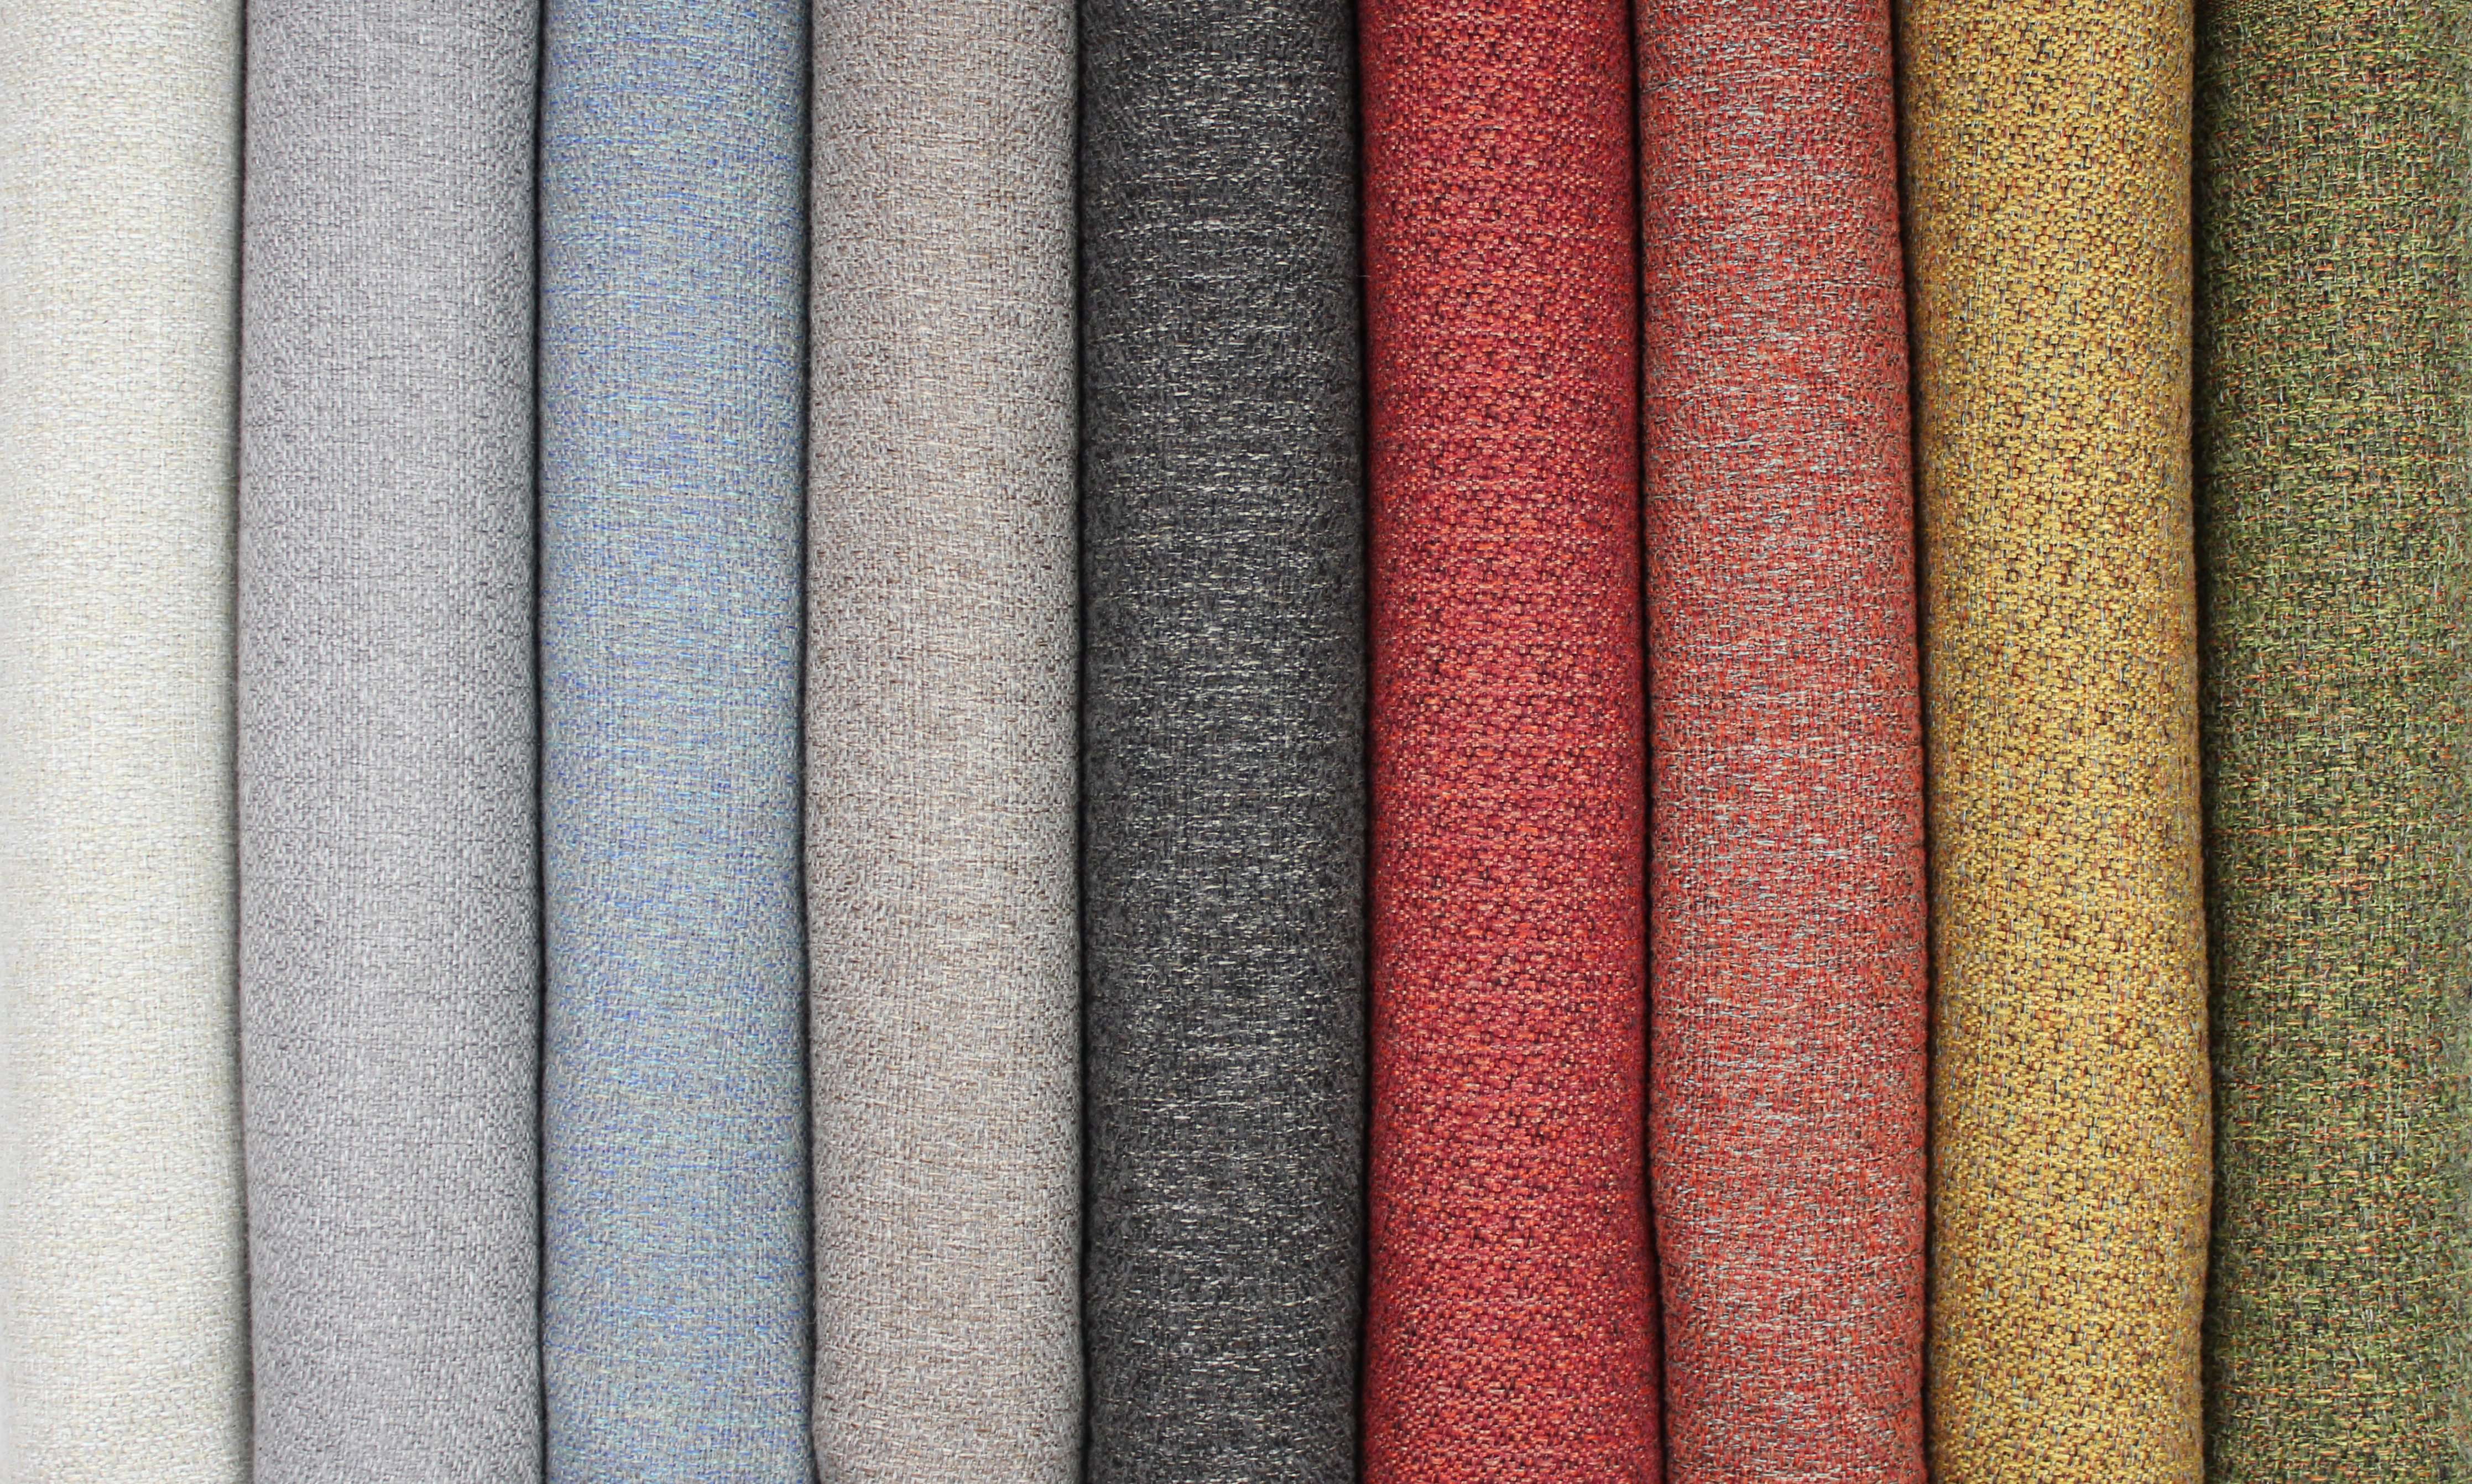 McAlister Textiles Highlands Rustic Plain Charcoal Grey Fabric Fabrics 